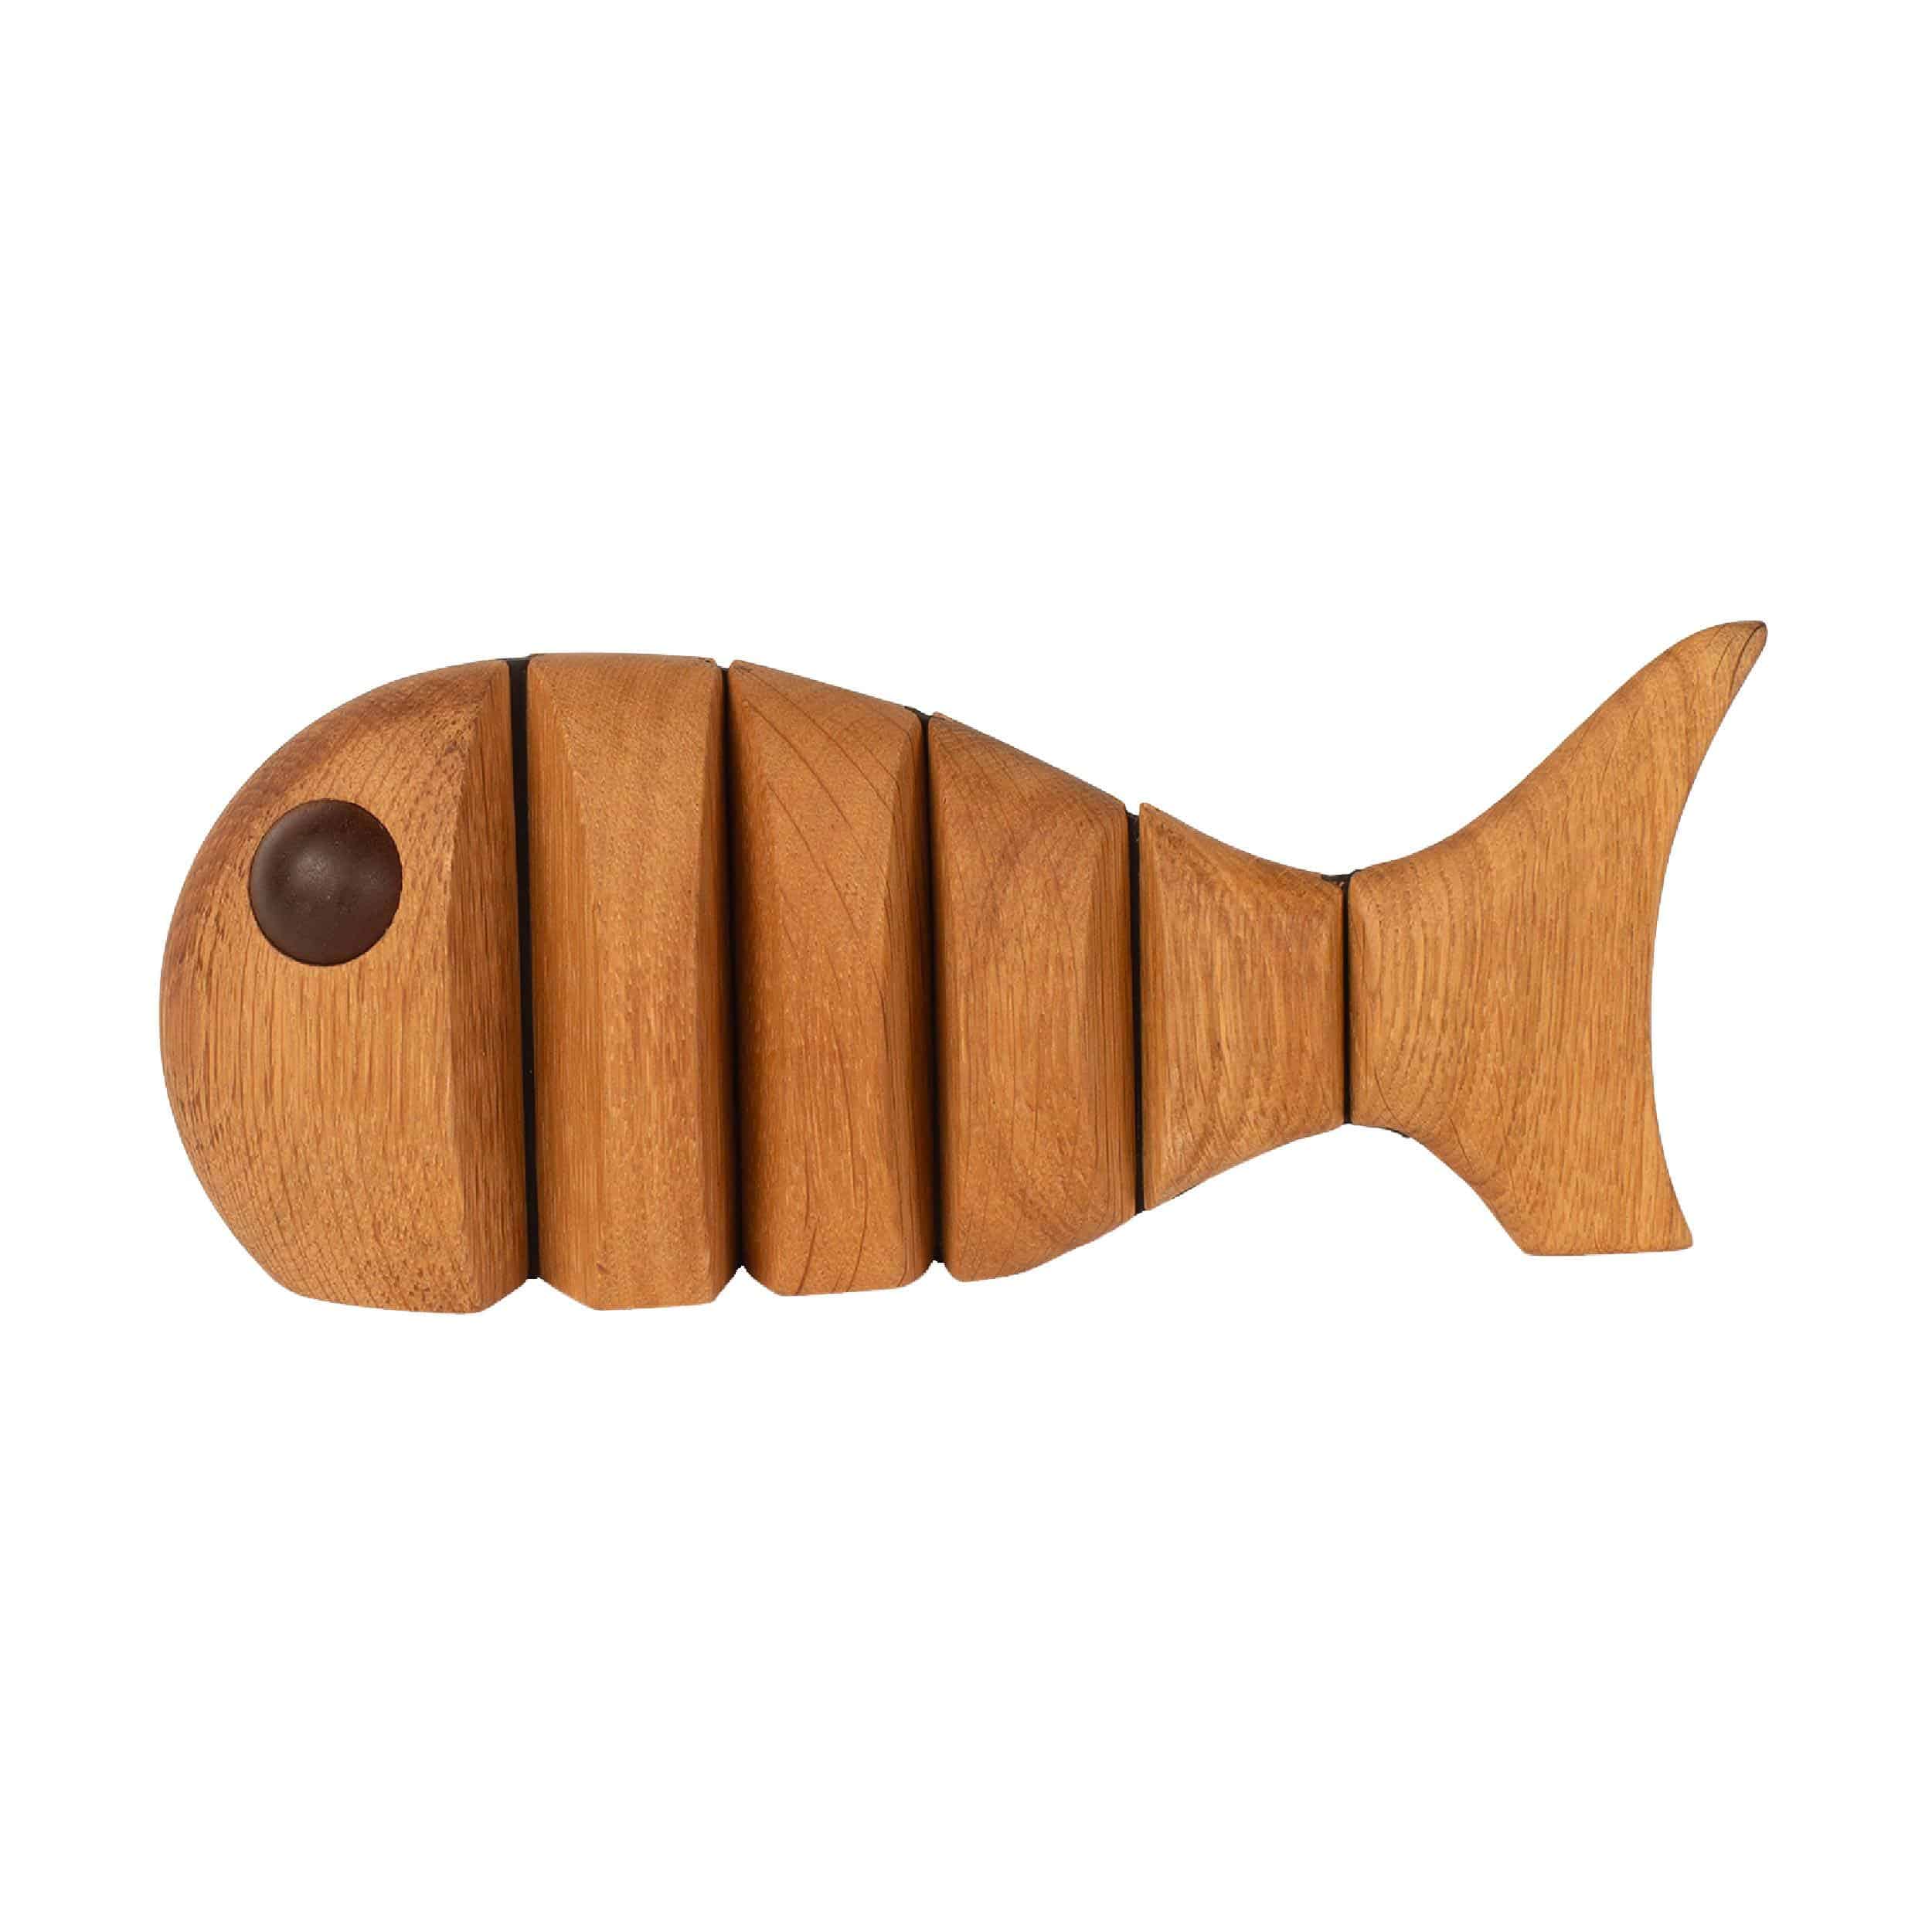 The Wood Fish Figur